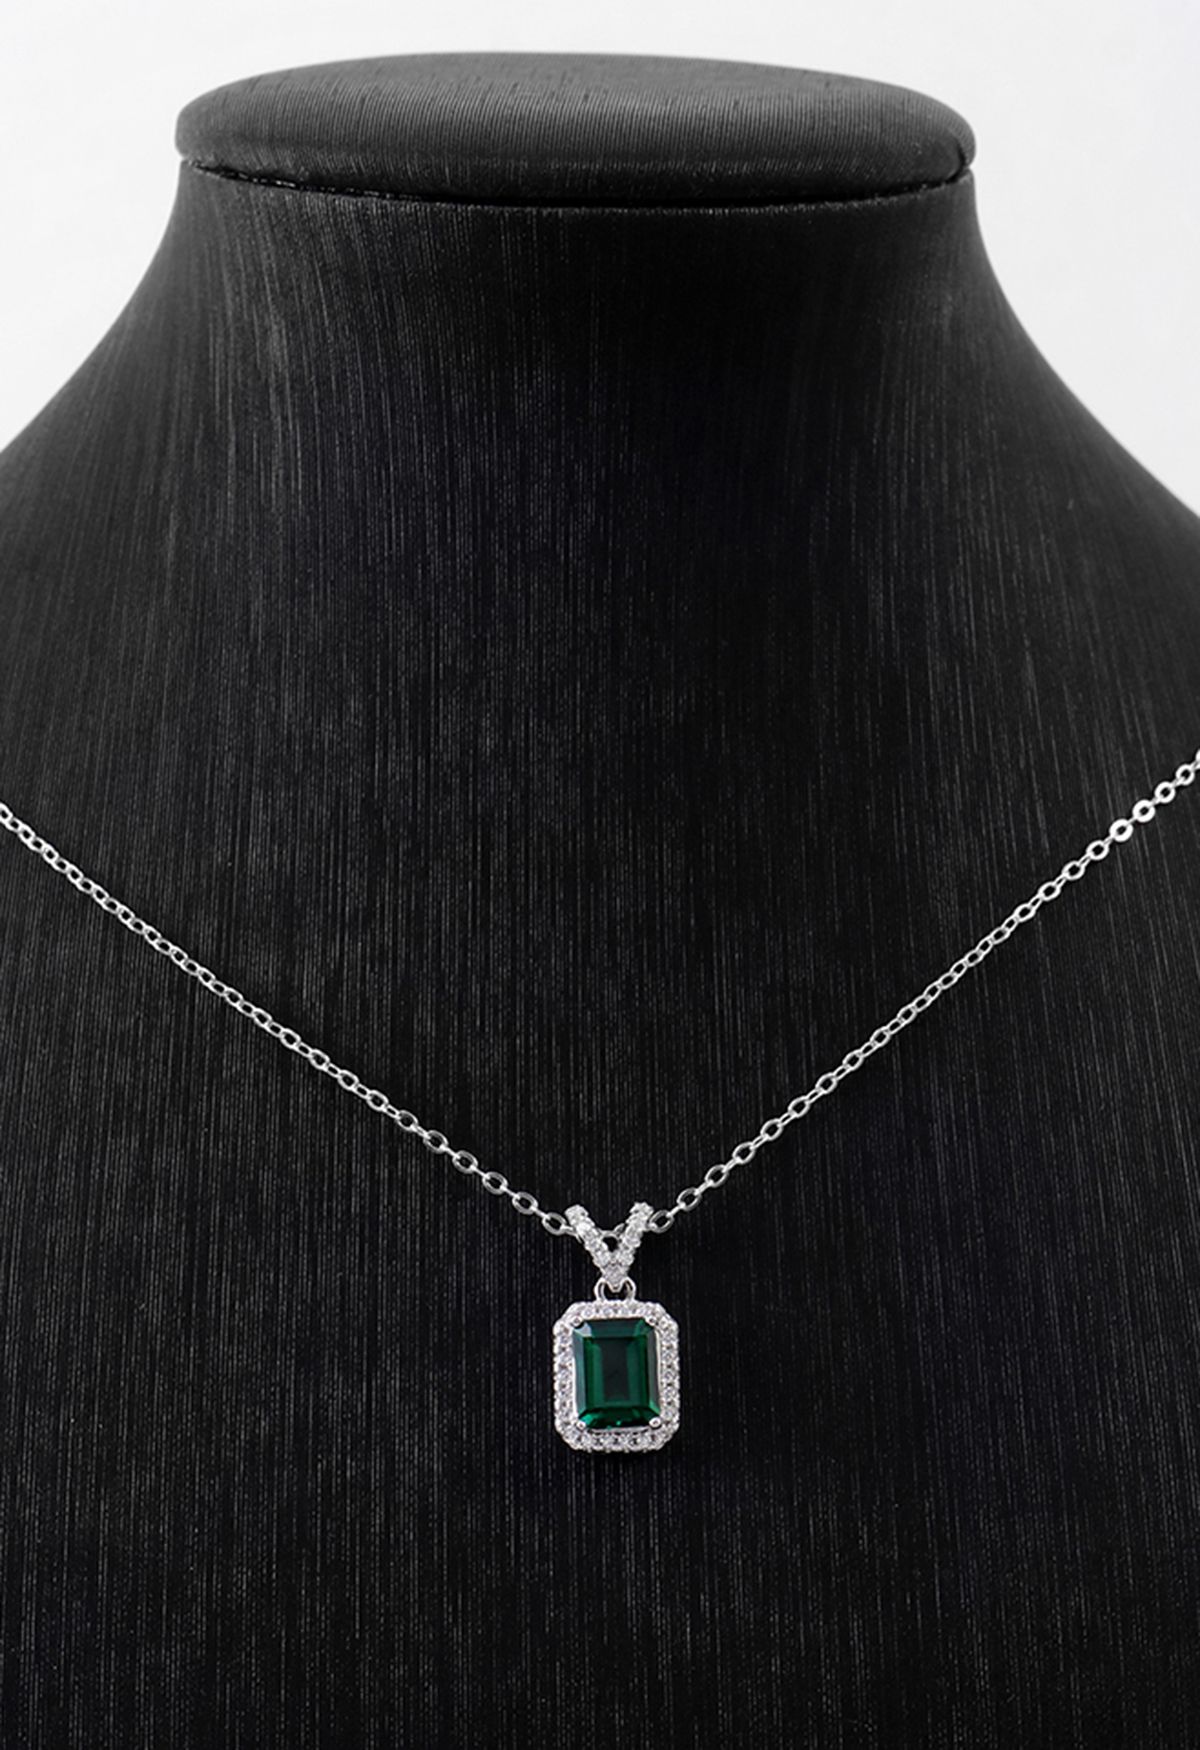 V-Shape Diamond Emerald Gem Necklace